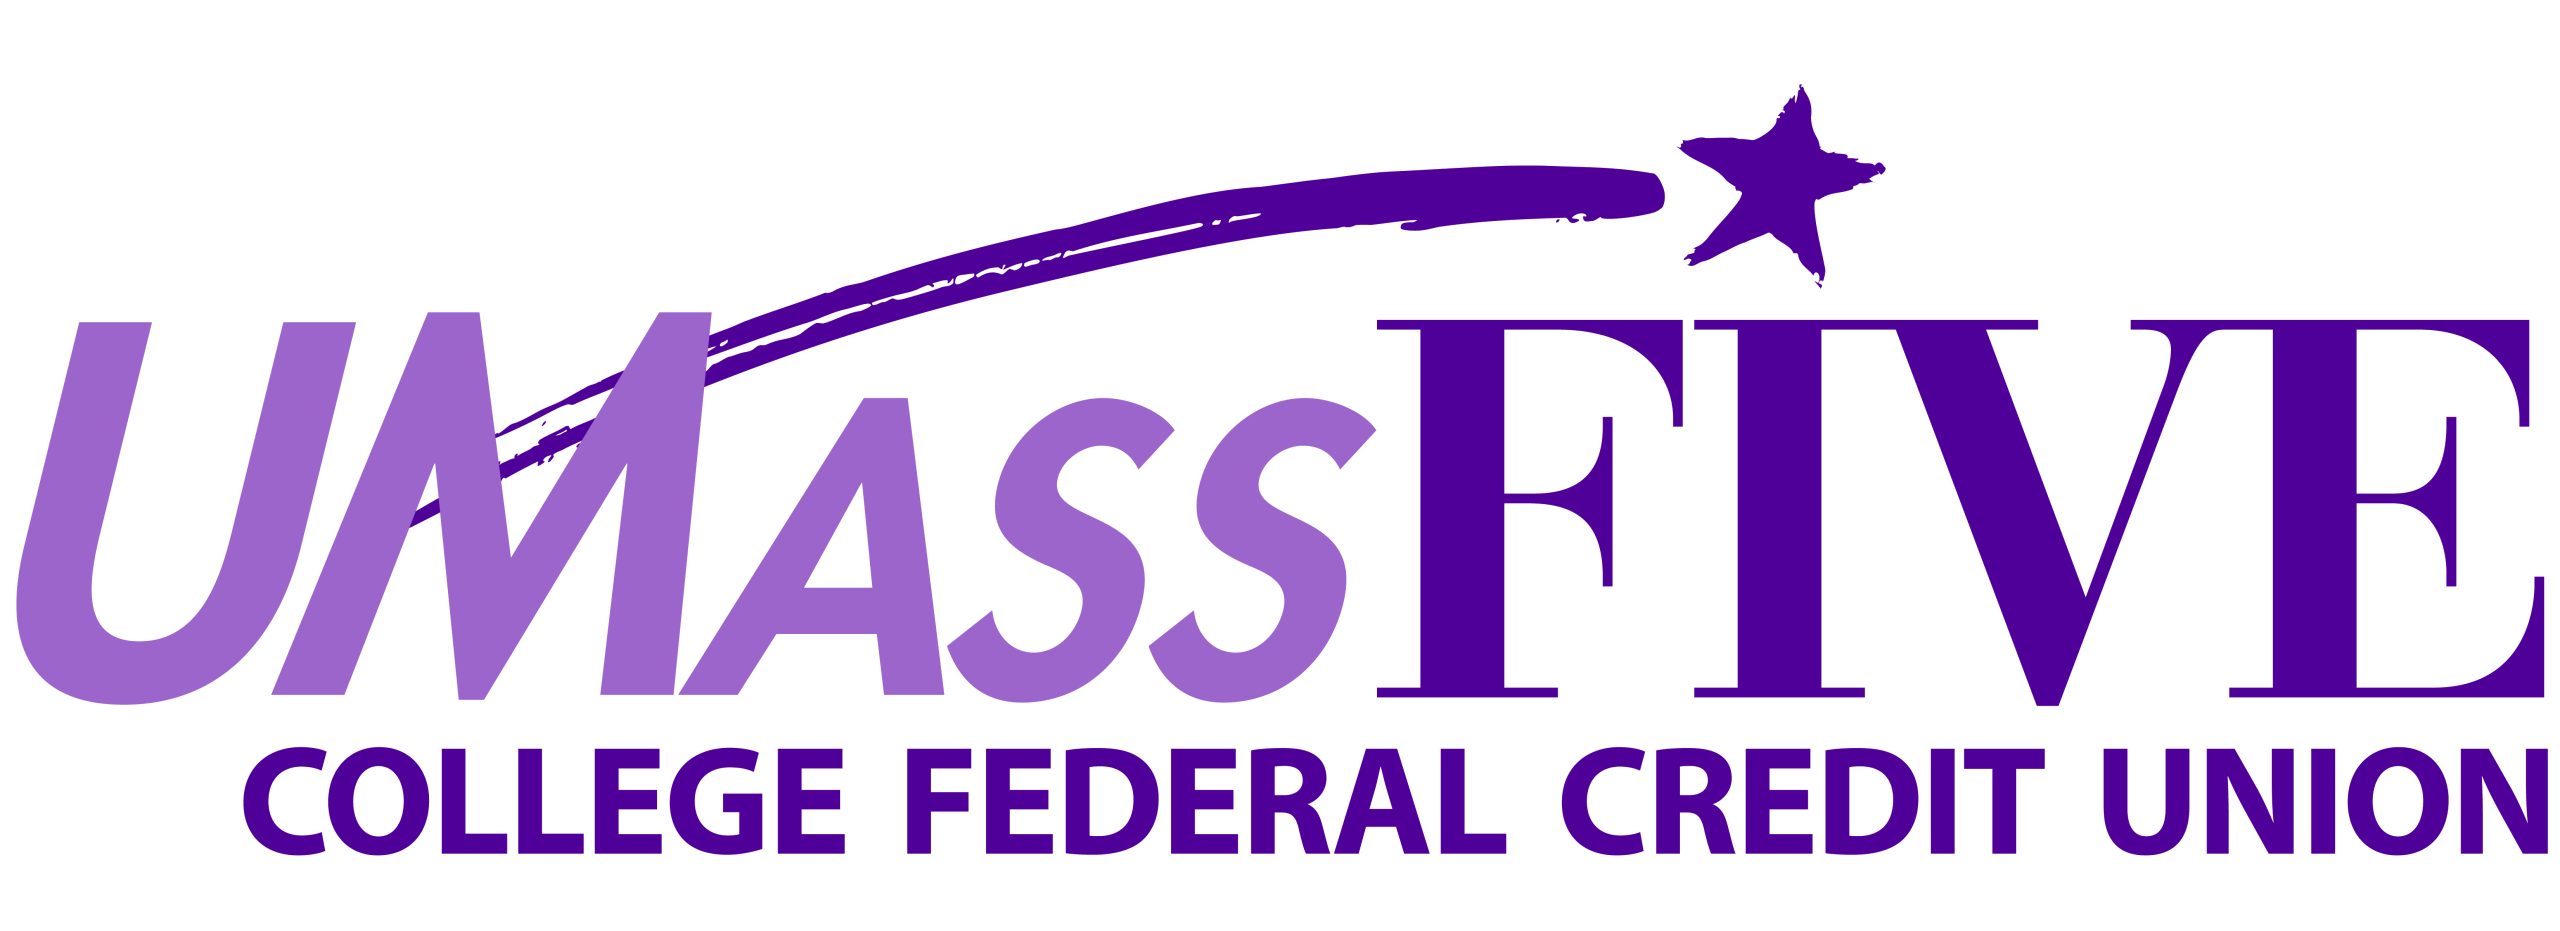 Logo: UMass Five college federal credit union